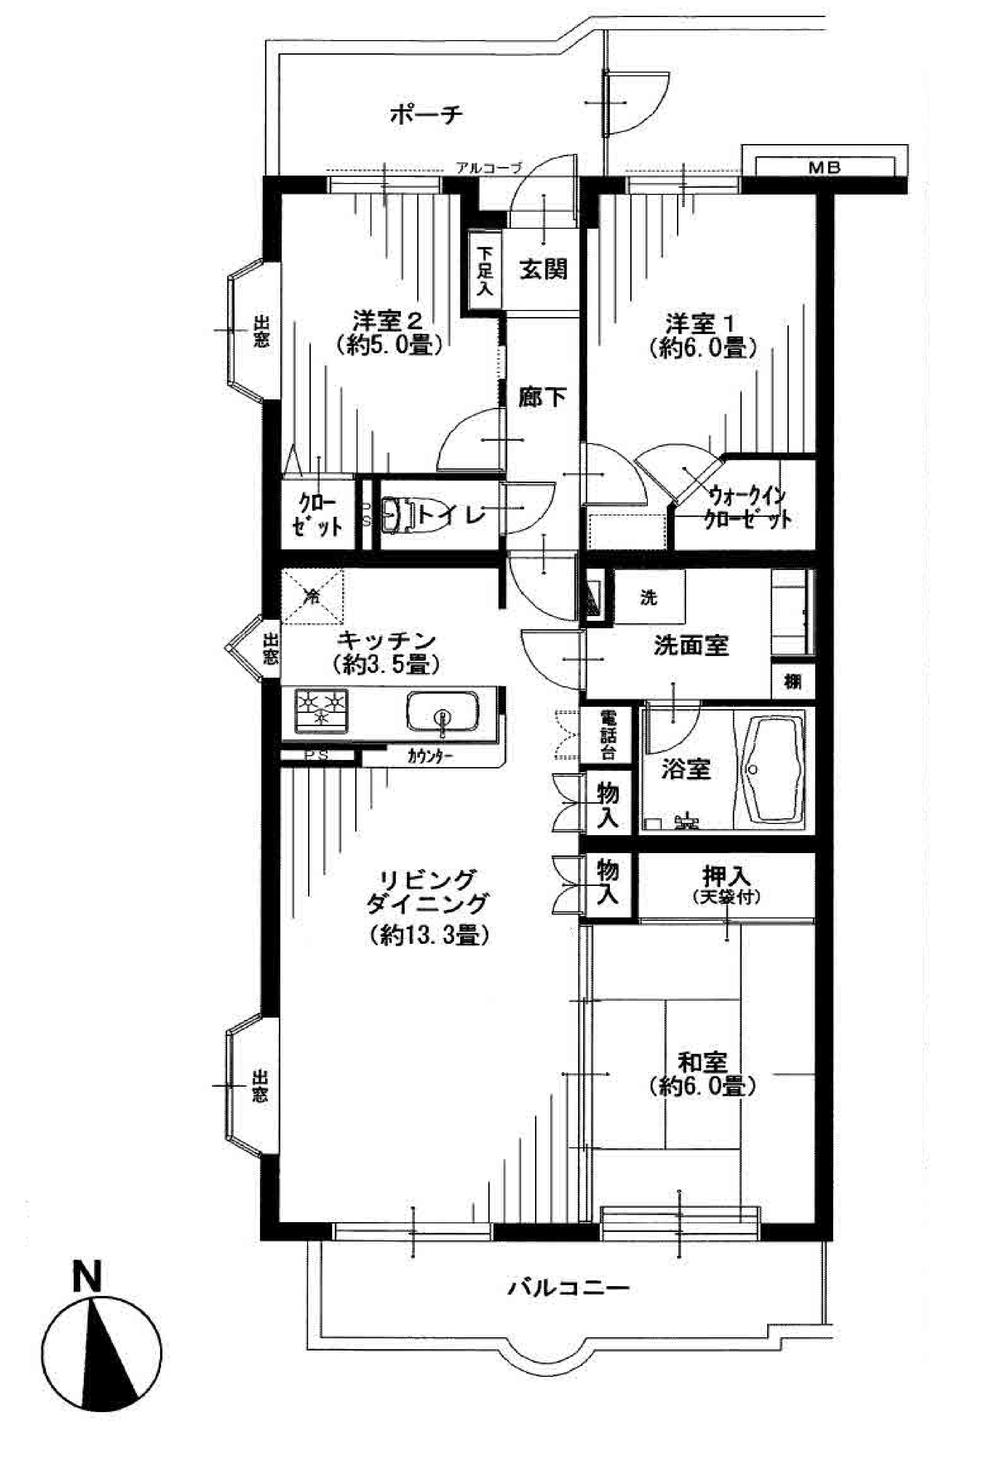 Floor plan. 3LDK + S (storeroom), Price 25,300,000 yen, Occupied area 75.03 sq m , Balcony area 7 sq m